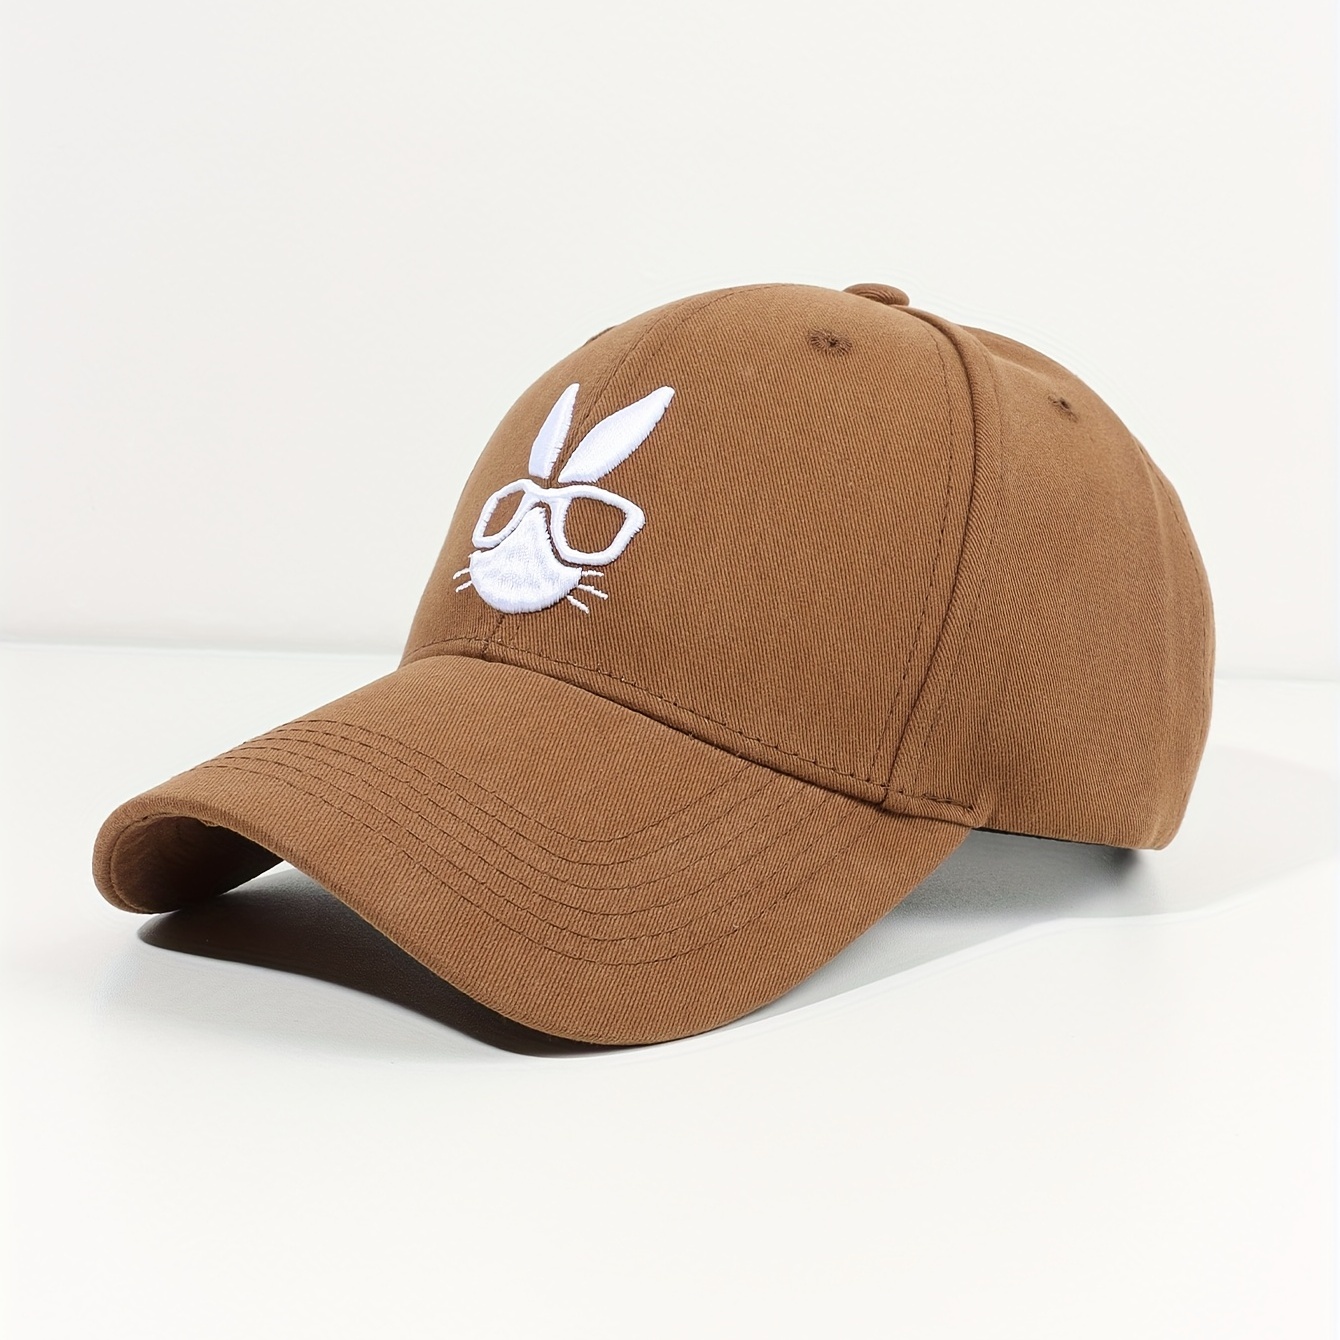 Bad Rabbit Embroidered Baseball Adjustable Solid Color Dad Hats